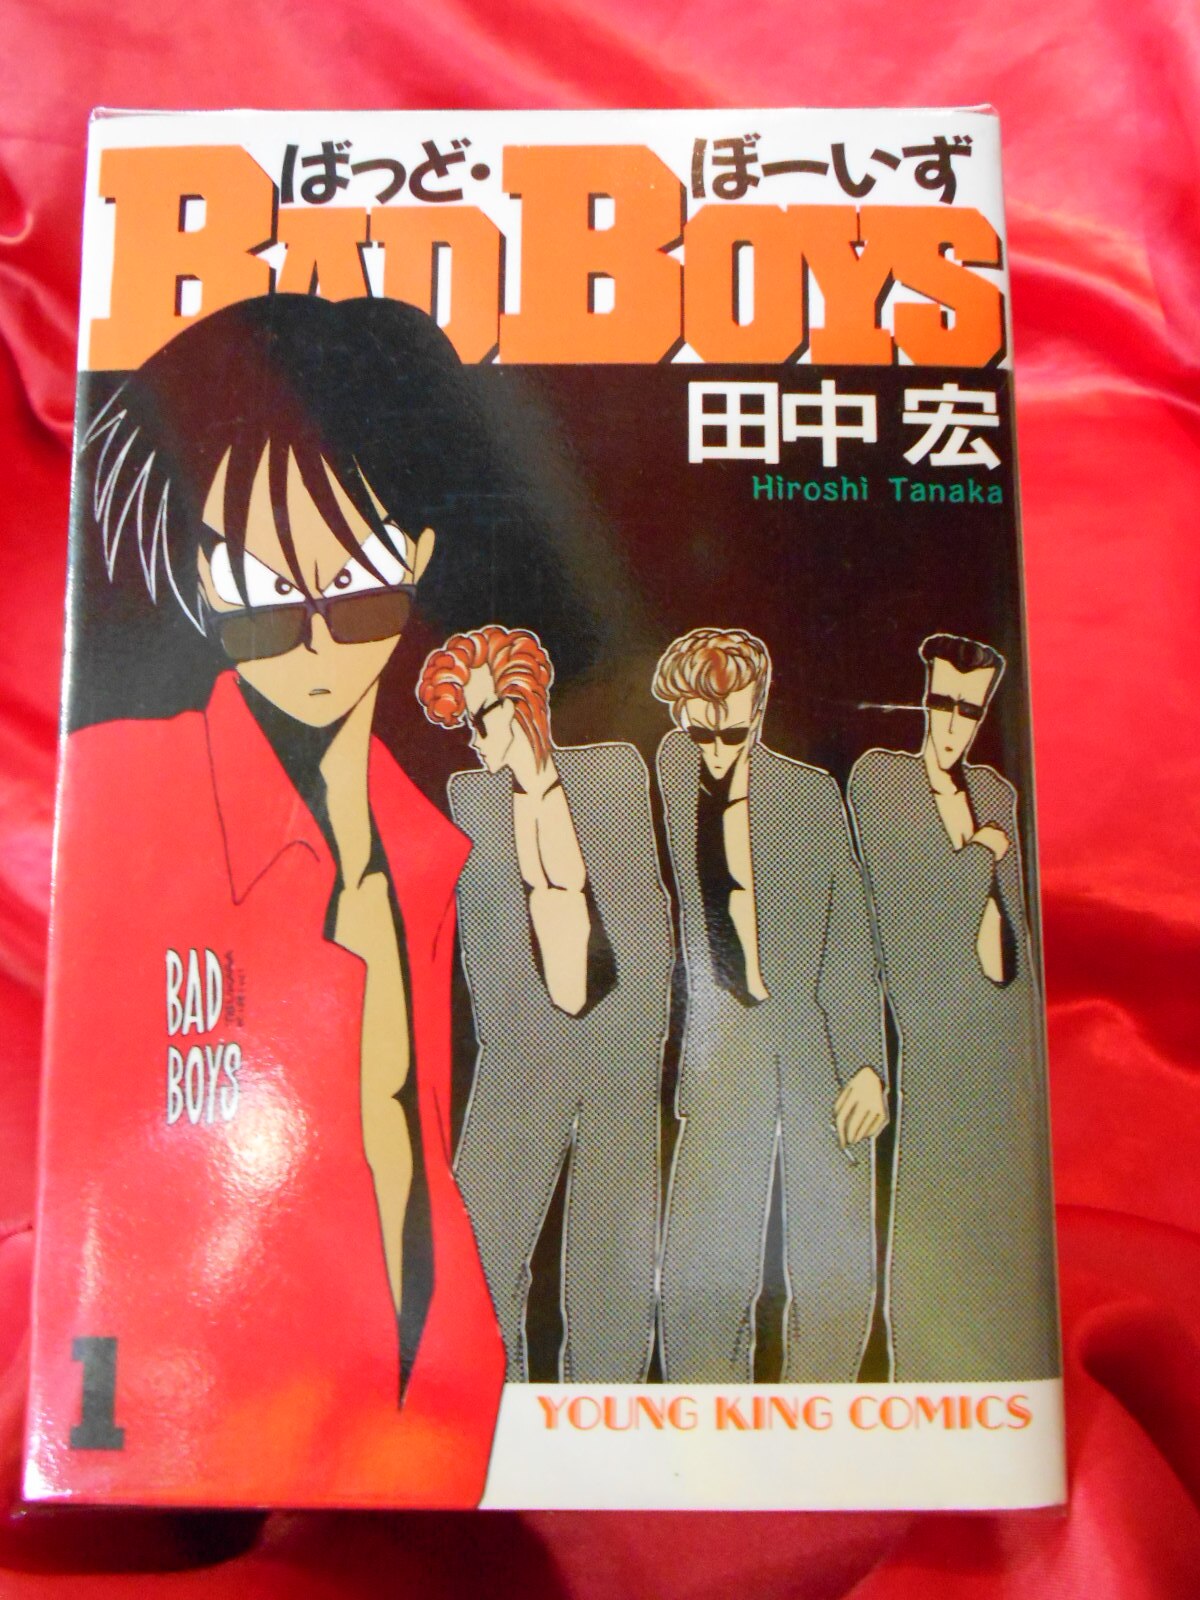 Shonen Gahosha Young King Comics Hiroshi Tanaka Badboys Complete 22 Volume Set Mandarake Online Shop